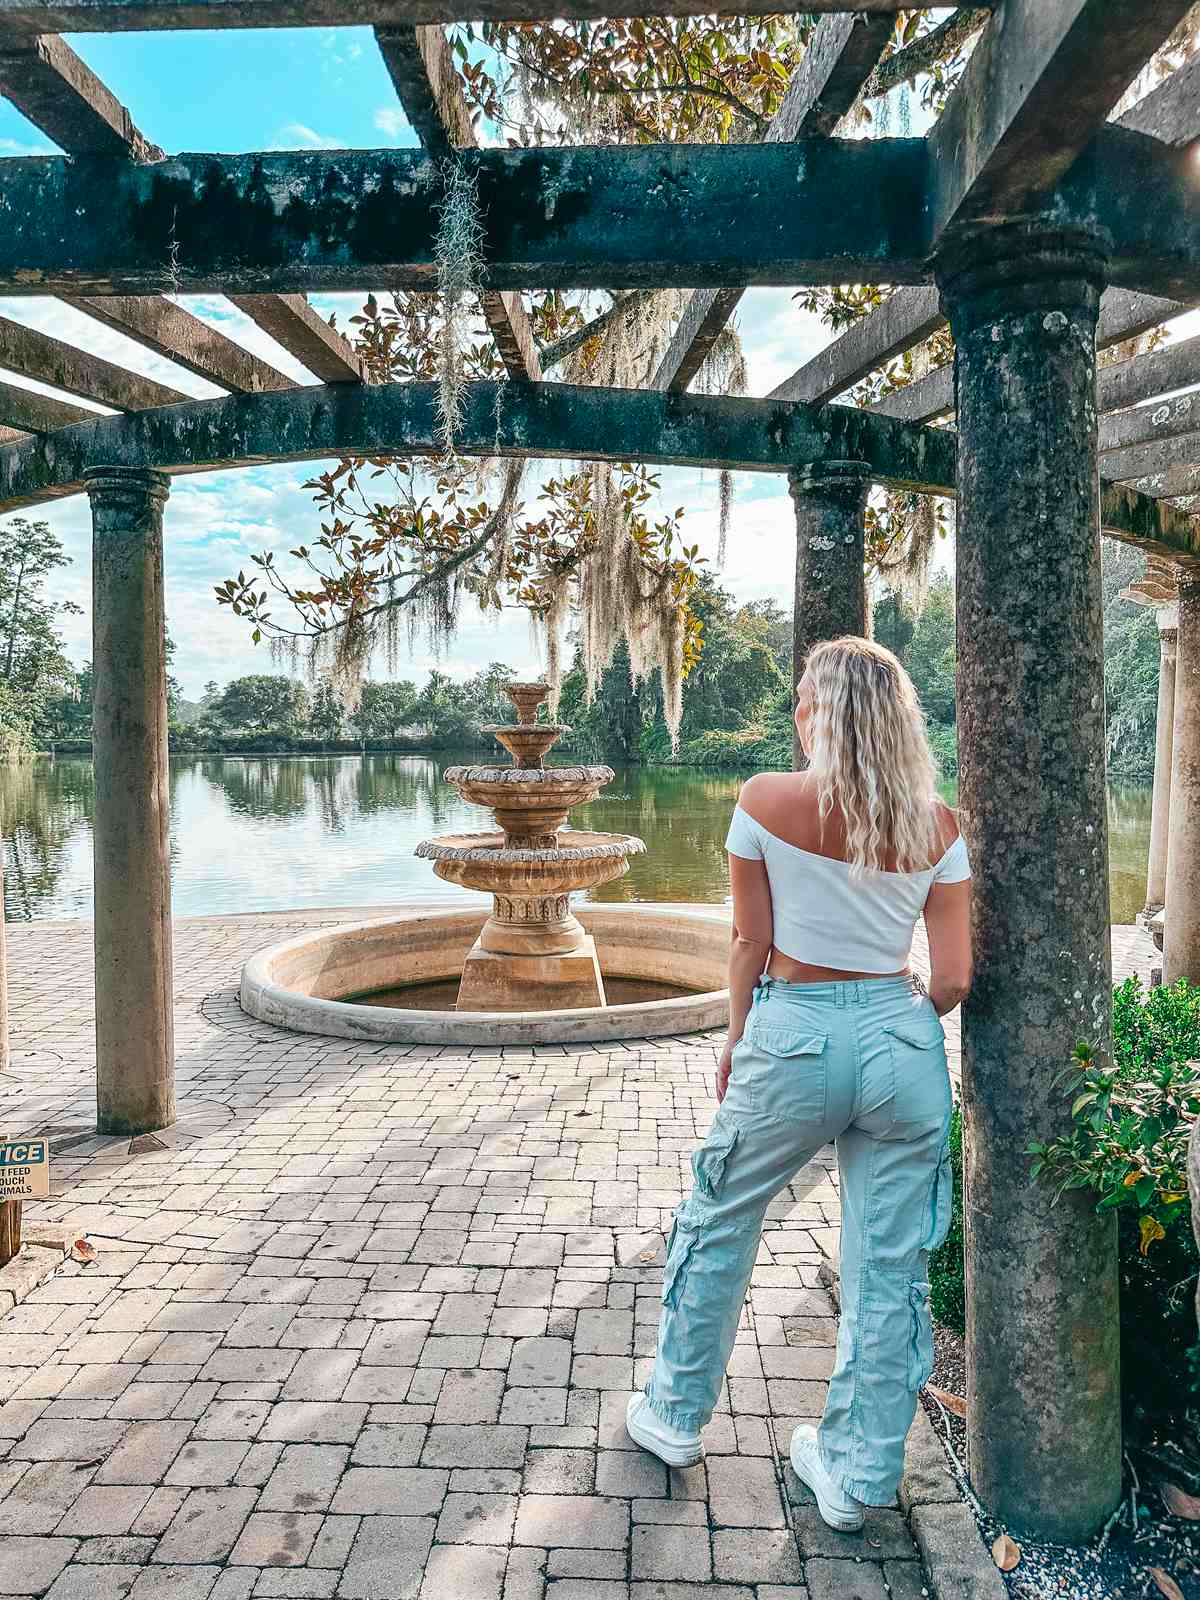 Wilmington North Carolina Airlie Gardens fountain